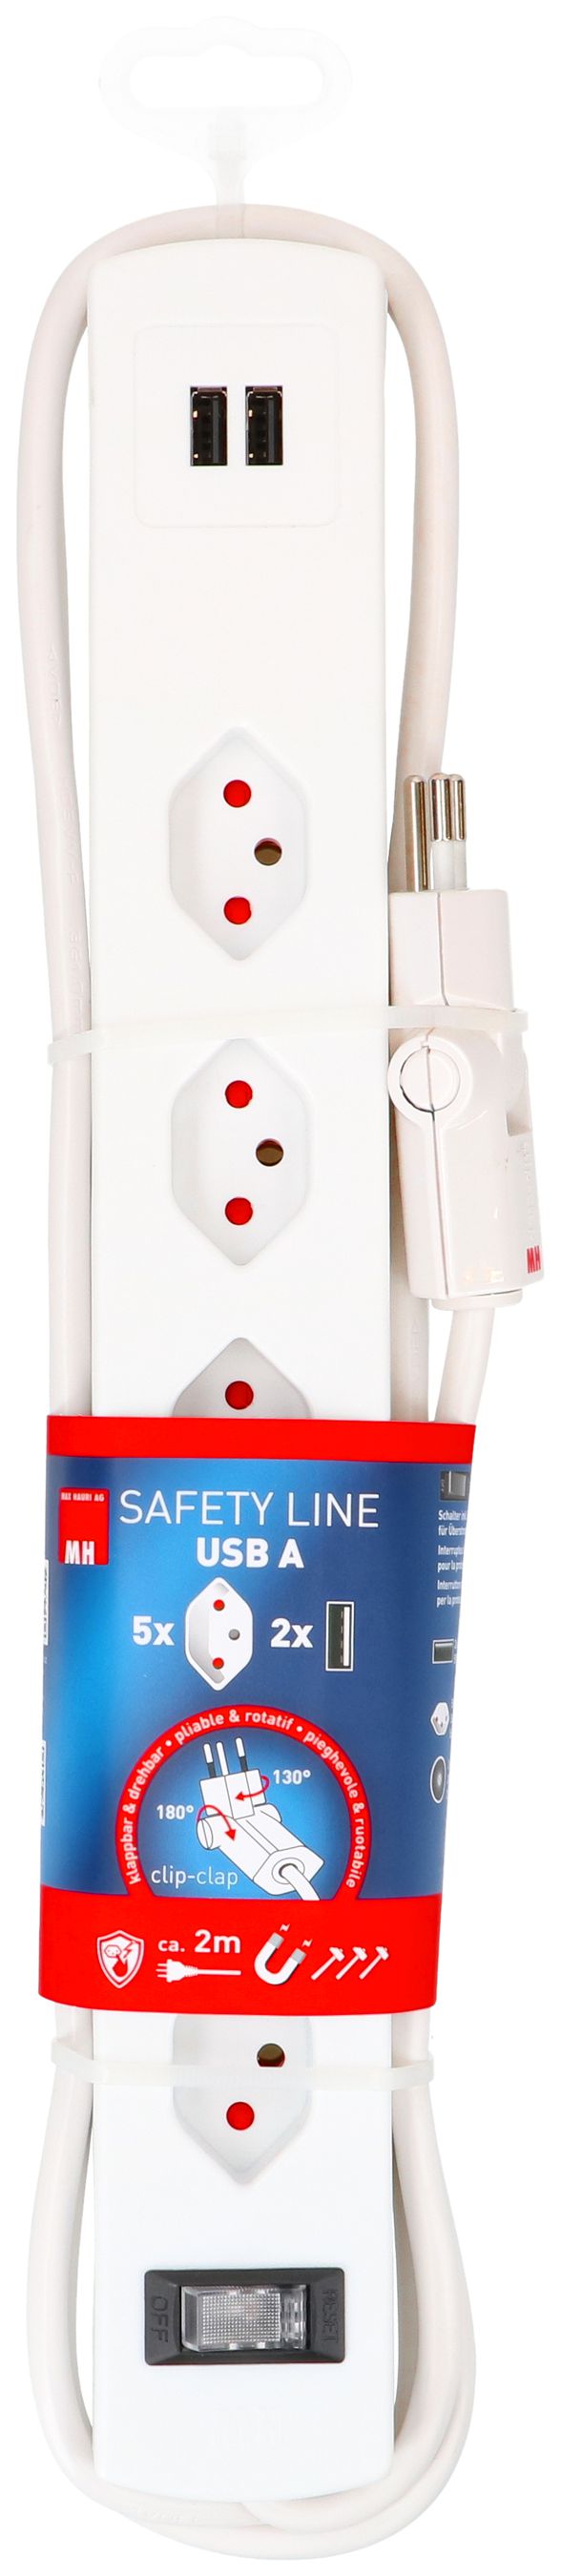 multipresa Safety Line 5x tipo 13 90° BS bi interruttore USB mag.